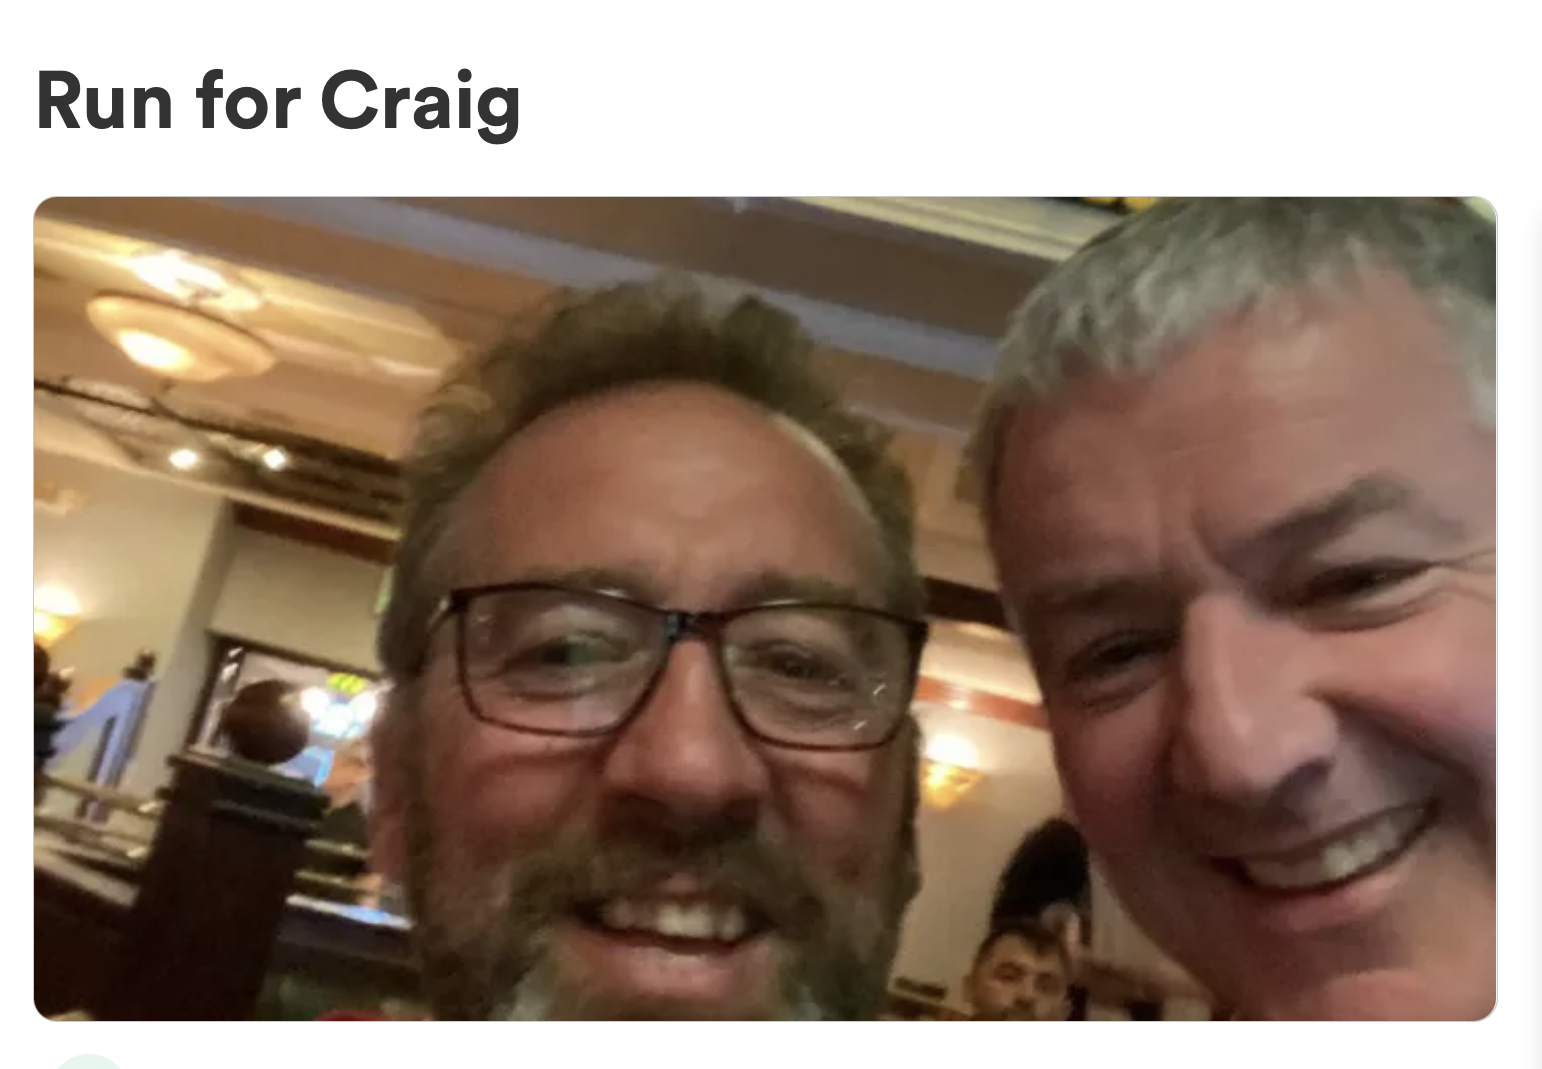 Run for Craig - Organised by John Boland